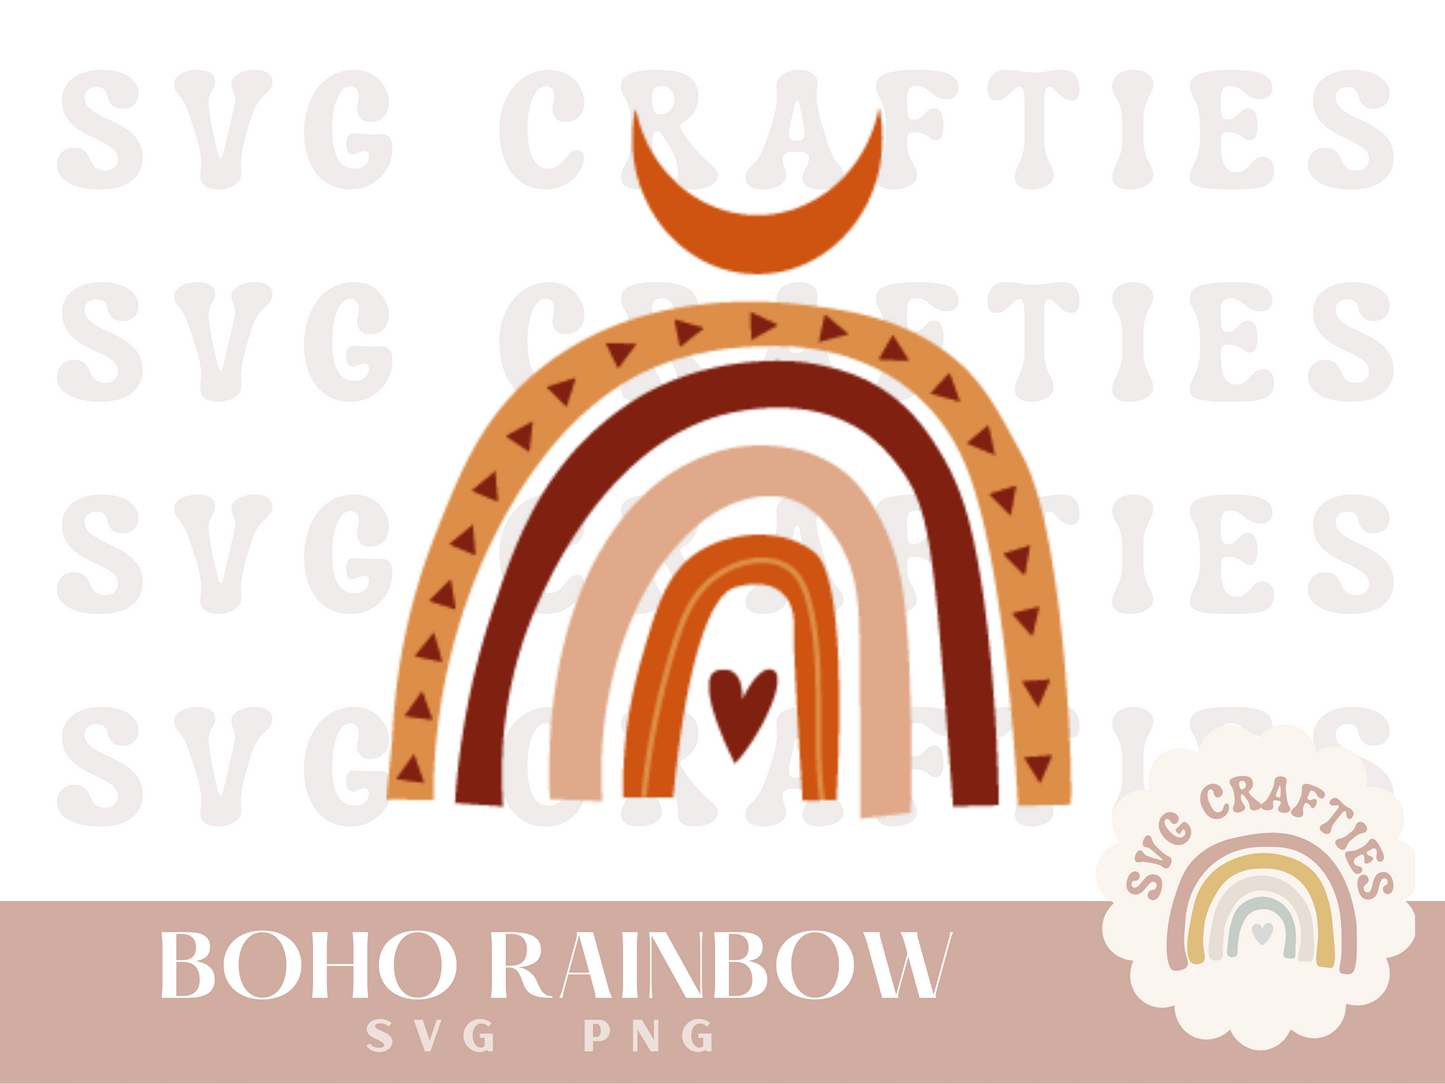 Boho Rainbow Free SVG Download